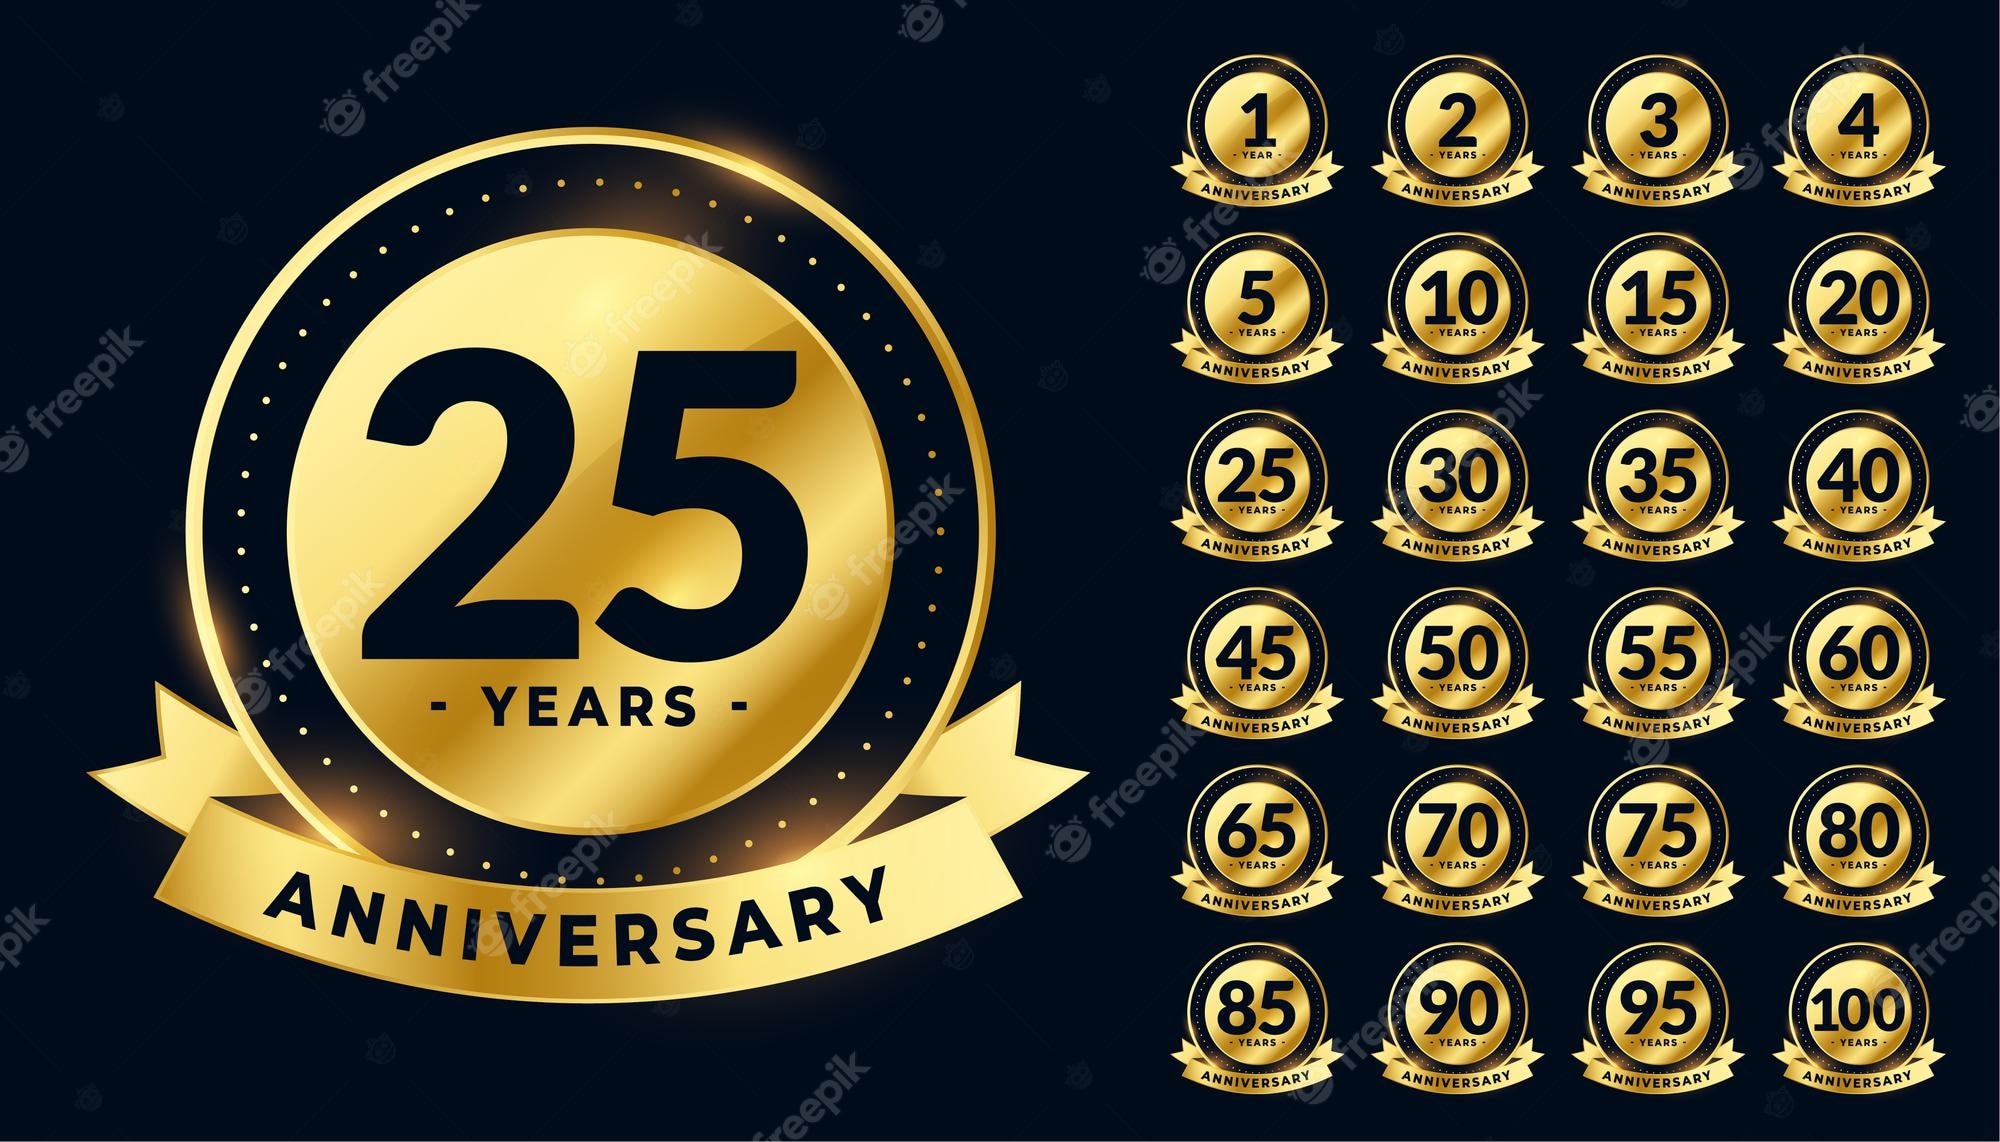 25 th anniversary logo and symbol design Stock Vector by ©tuastock 117732220